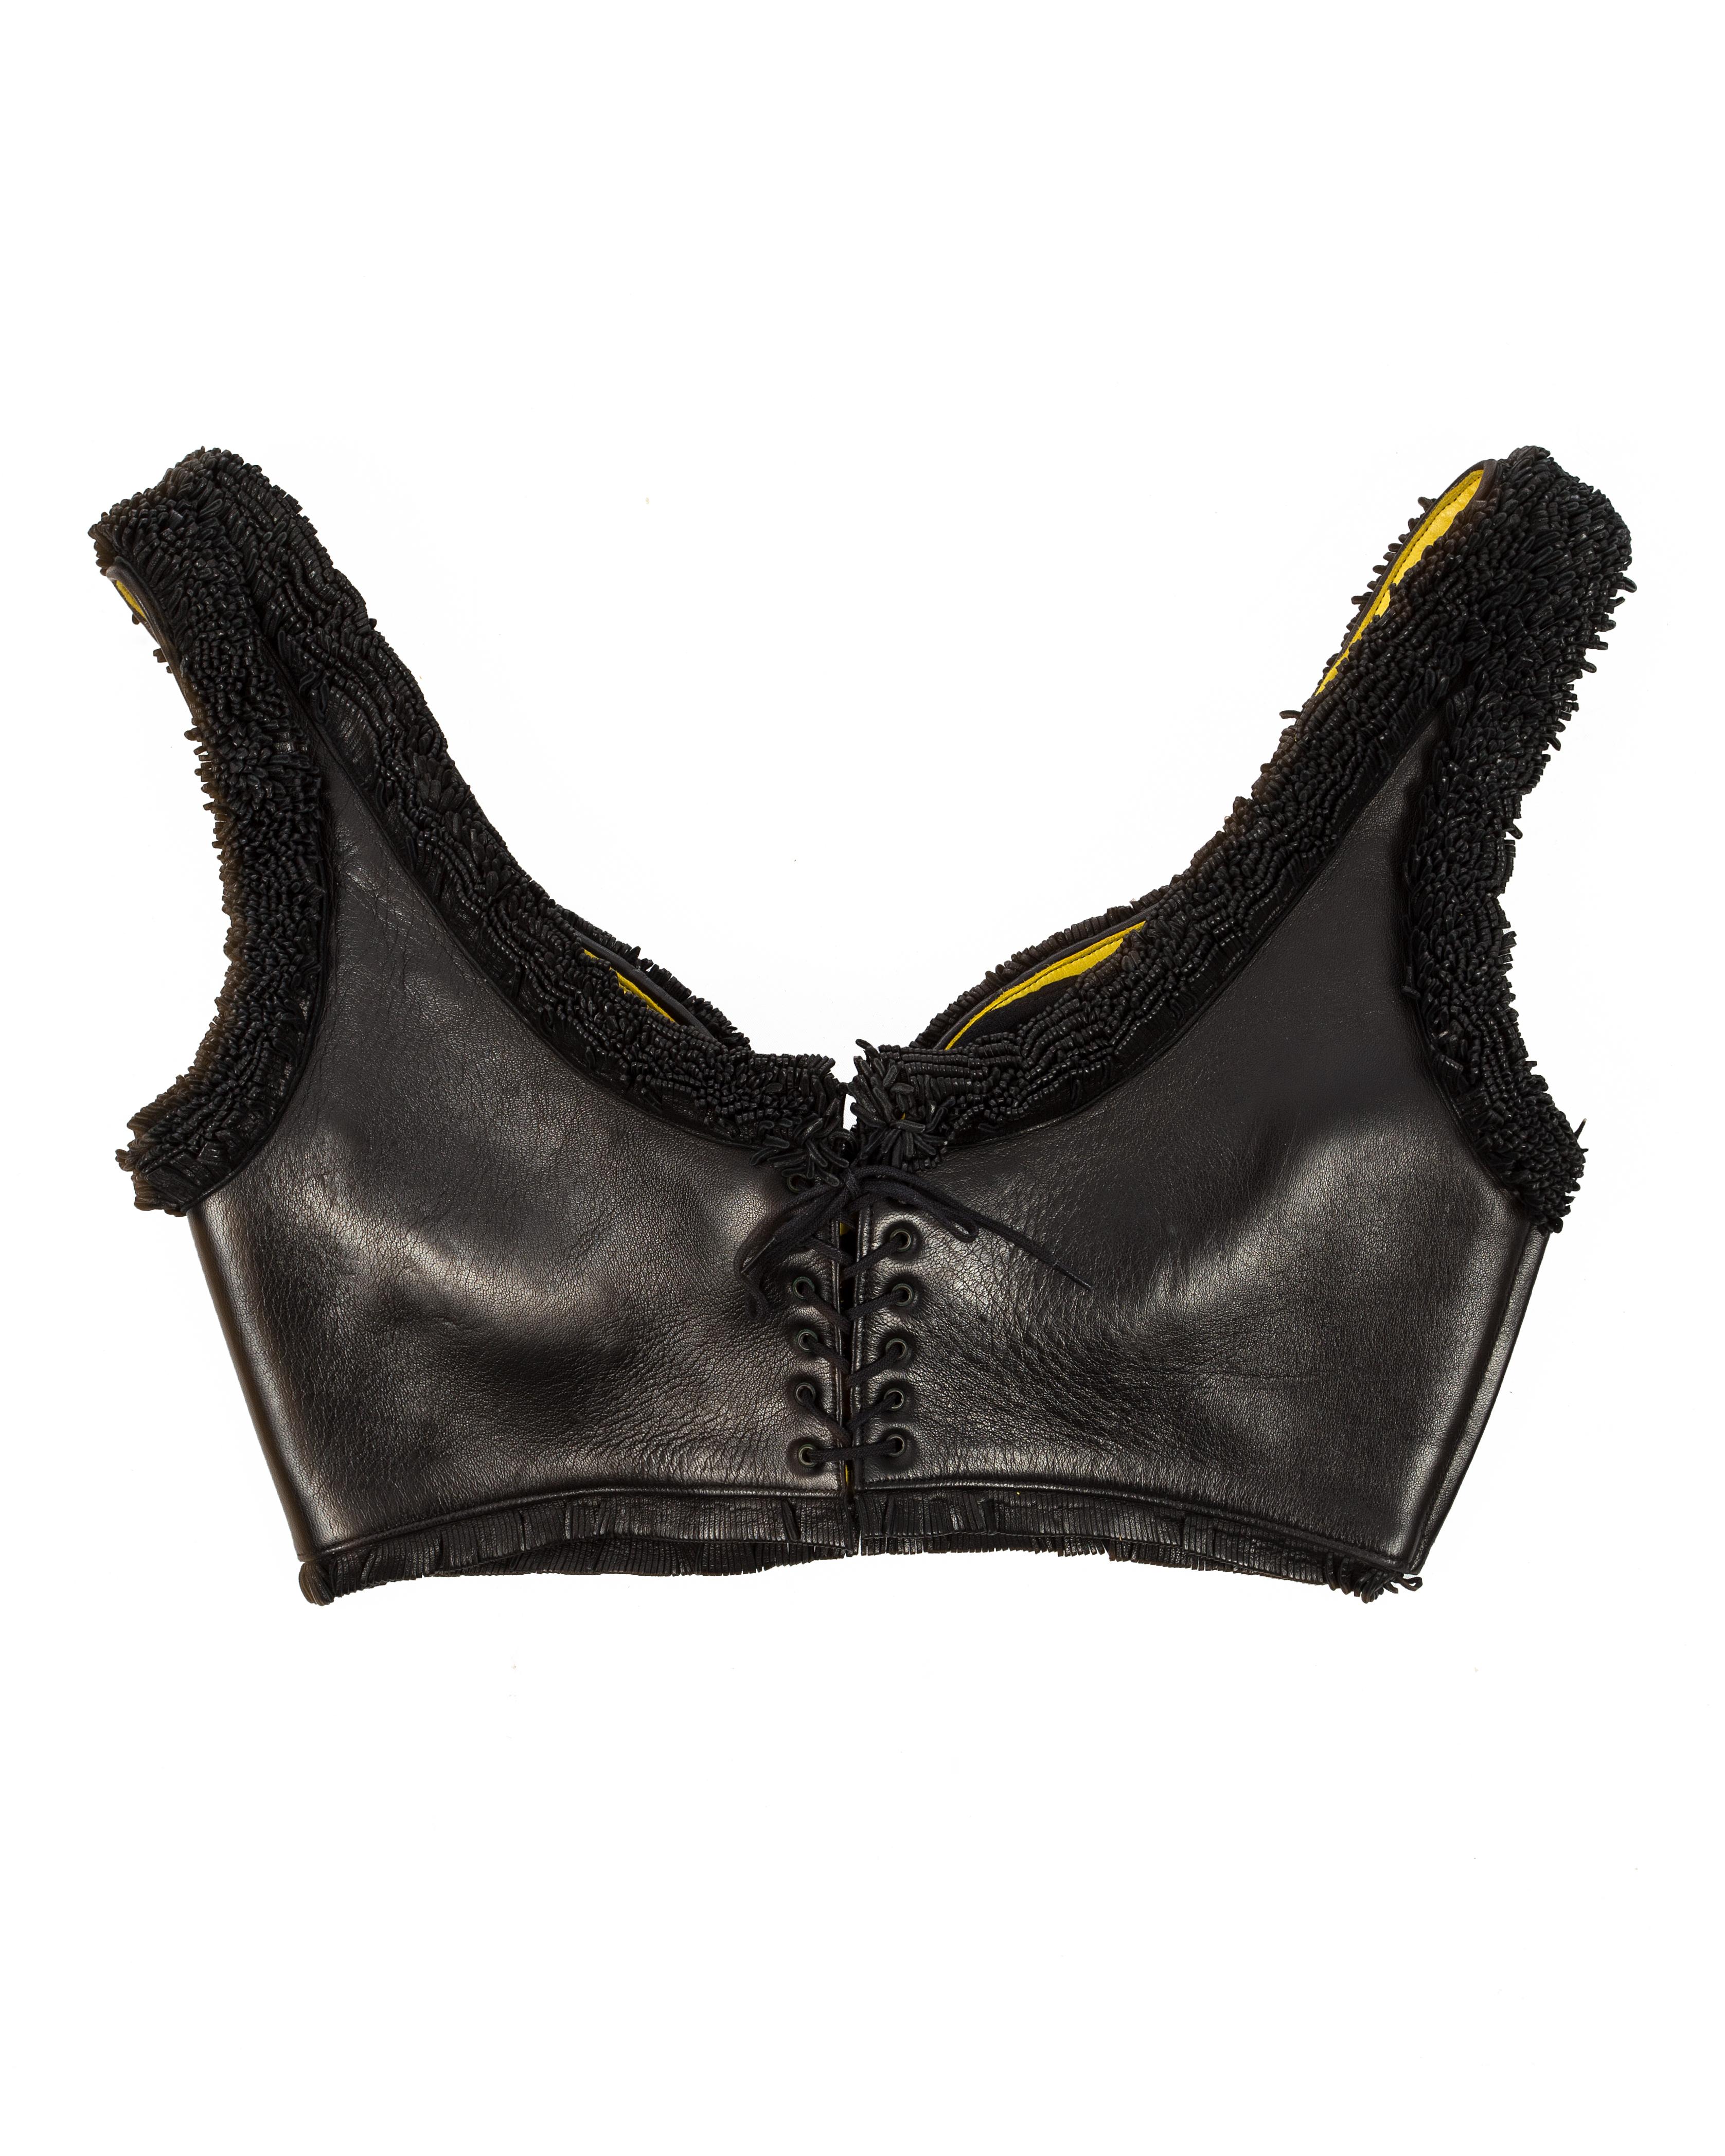 Women's Azzedine Alaia black leather fringed lace up bra, fw 1994